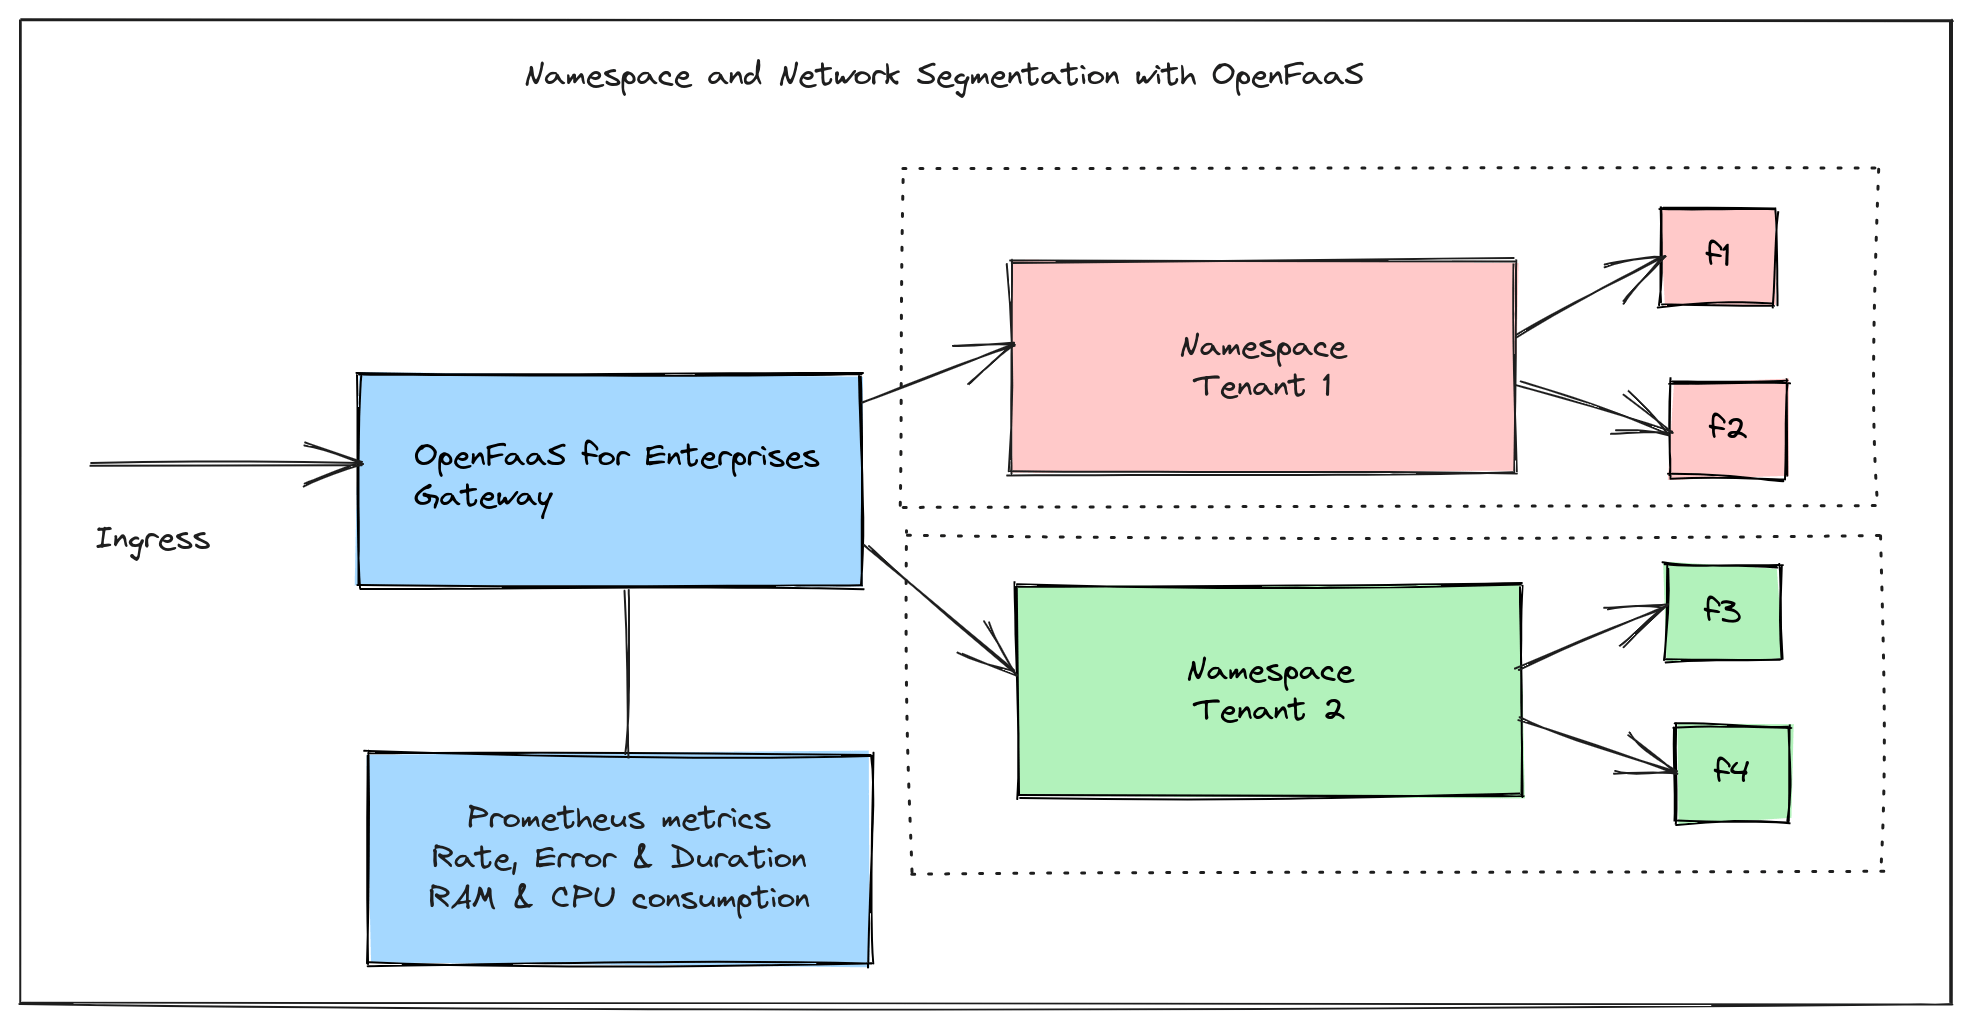 Network and namespace segmentation per tenant